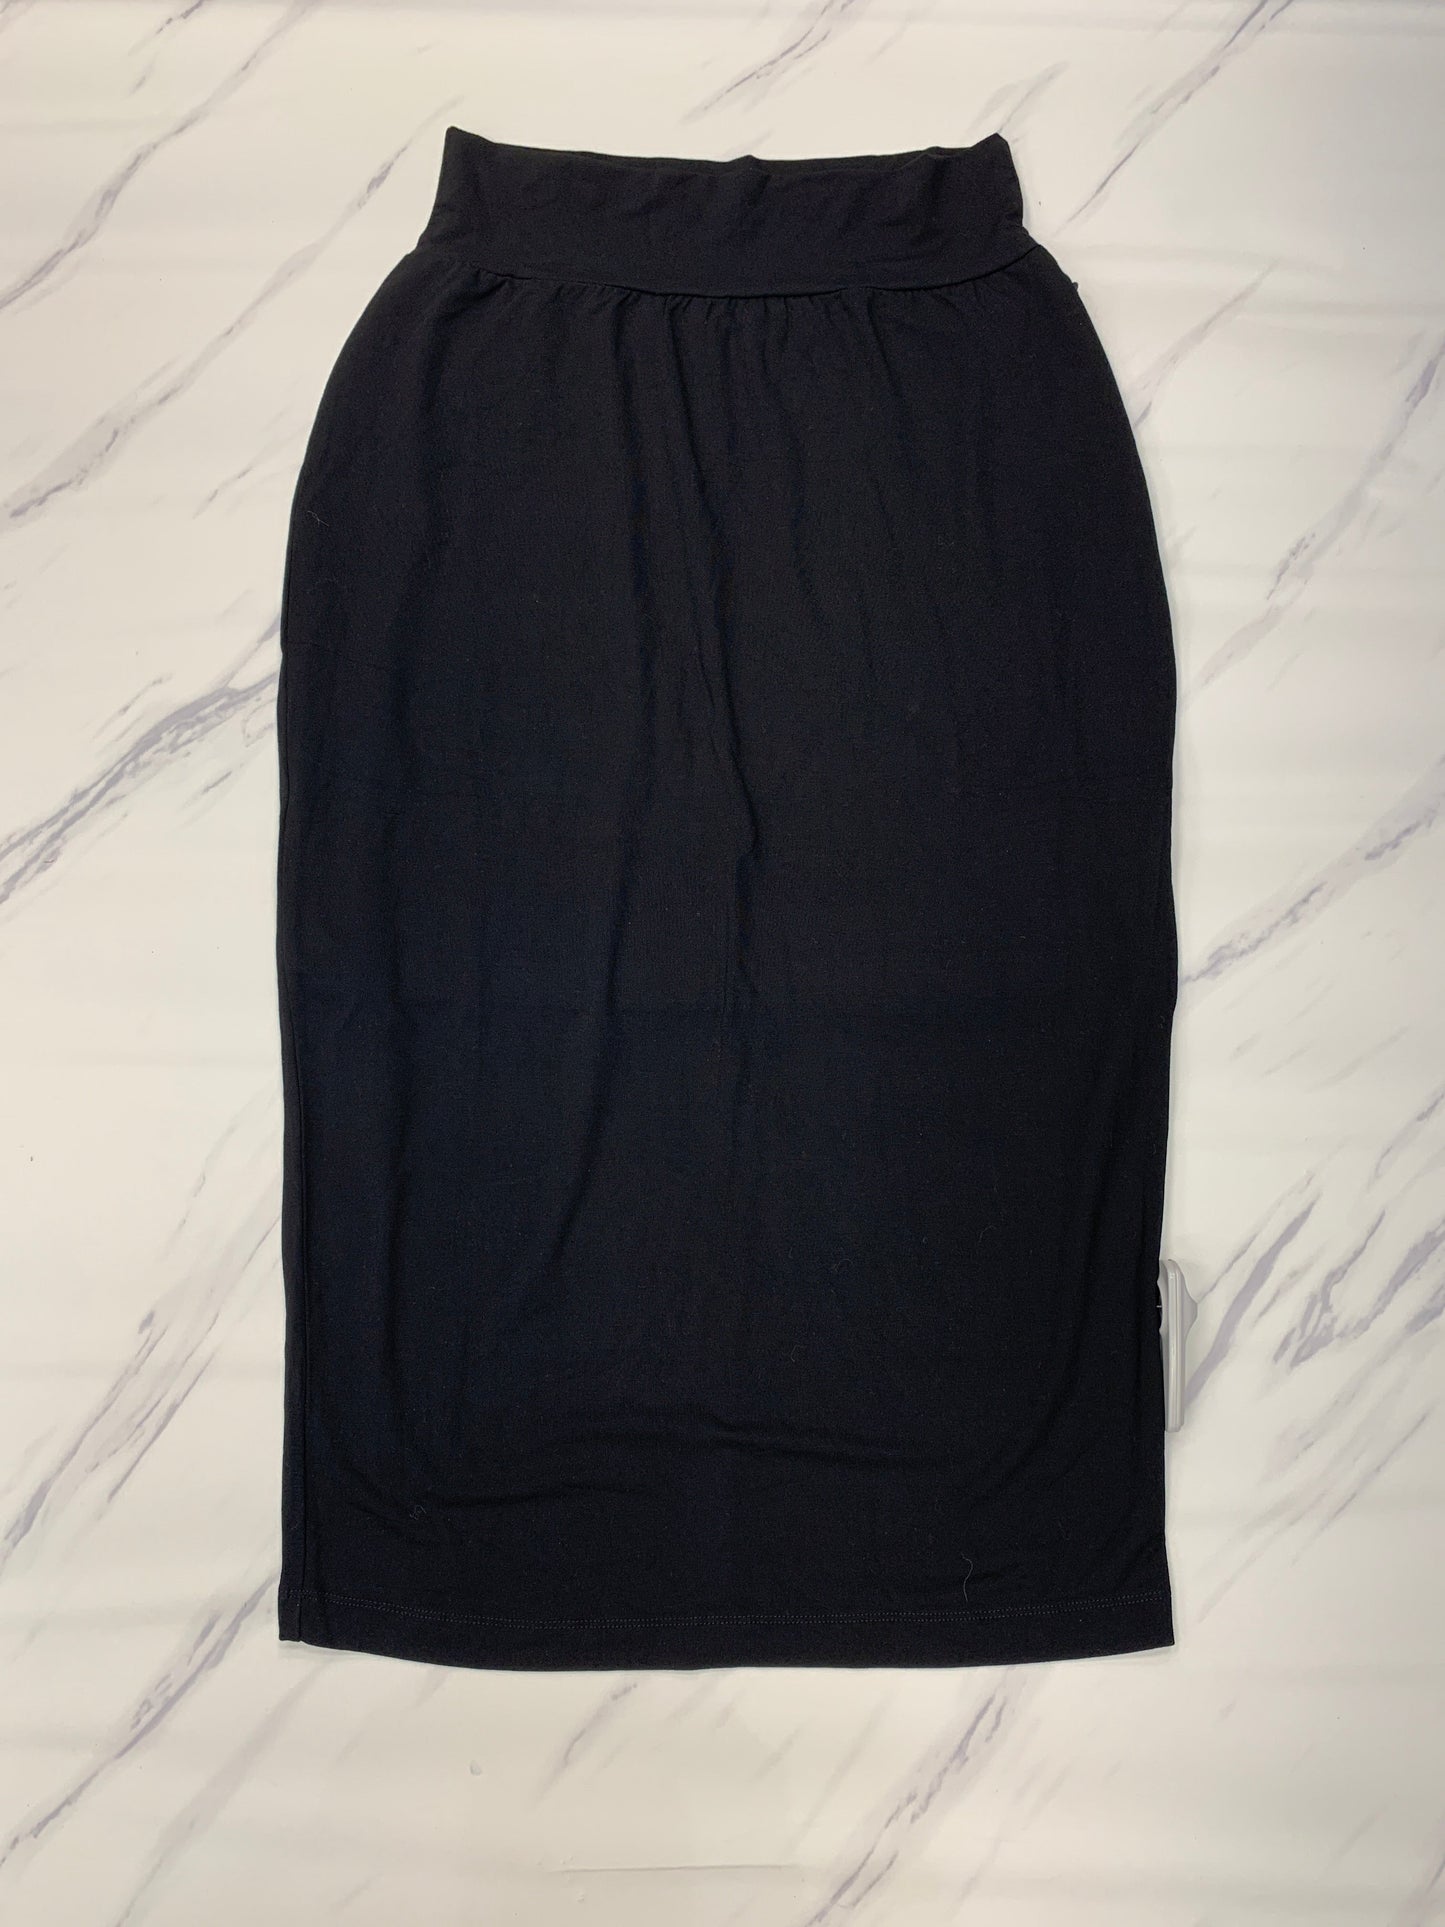 Black Skirt Maxi Cmb, Size M